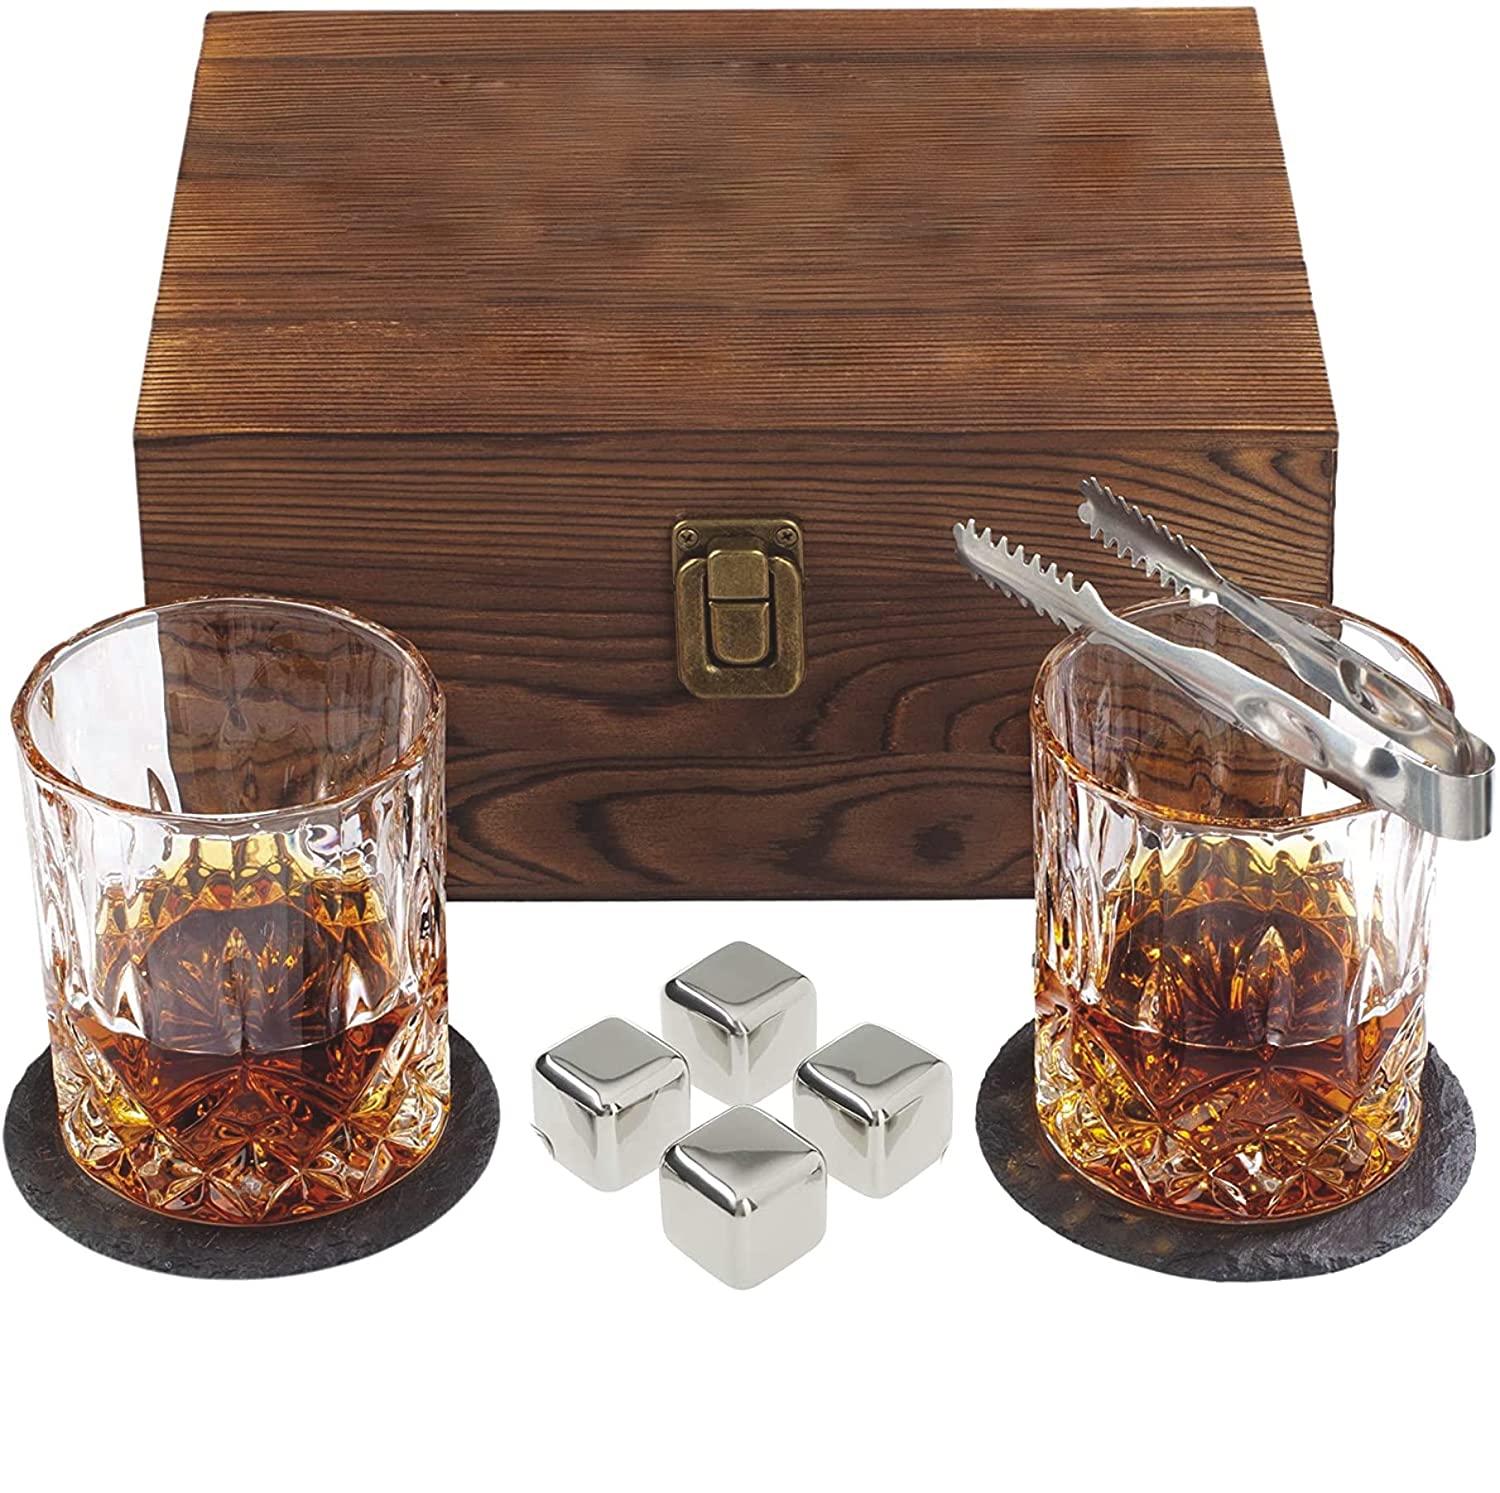 NJ Whiskey Glass Set - Whisky Chilling Gift Set - Scotch Metal Ice Cubes - Whiskey Set Gift Box - Whiskey Gifts for Men - Whiskey Stones Gift Set for Men - Perfect Diwali Gift